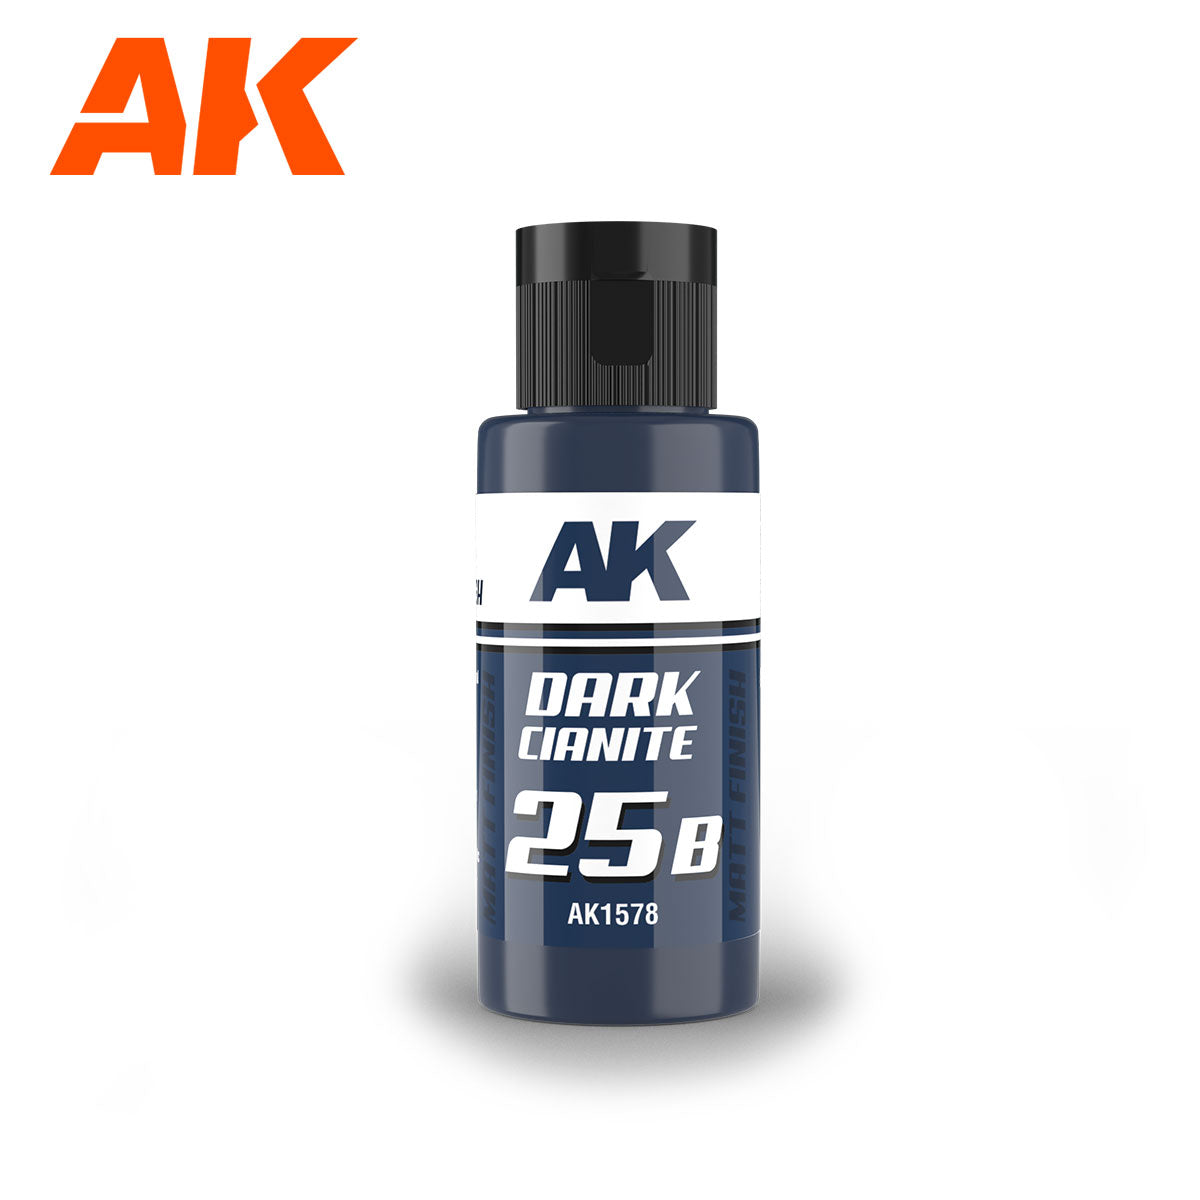 AK Interactive Dual Exo 25B - Dark Cianite 60ml